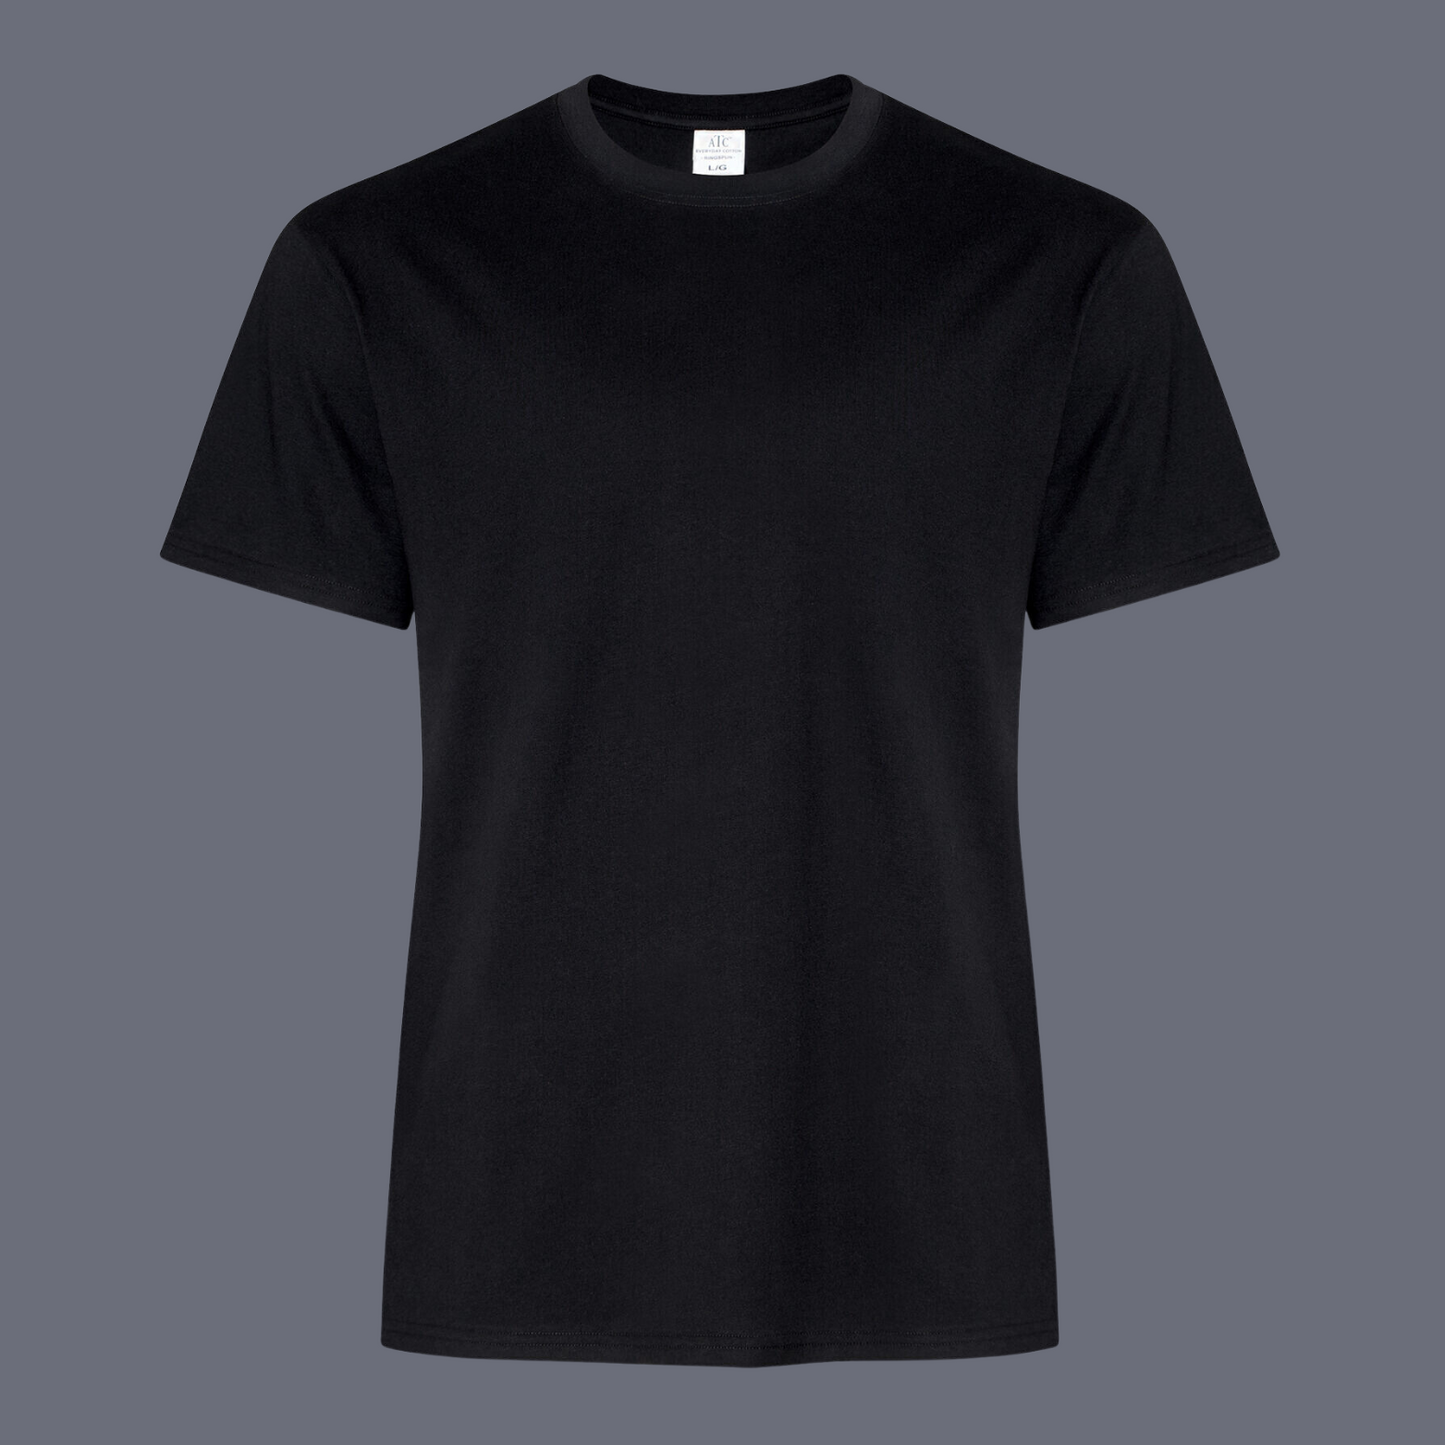 (Catalogue hommes/unisexe) T-shirt ATC Jersey DOUX